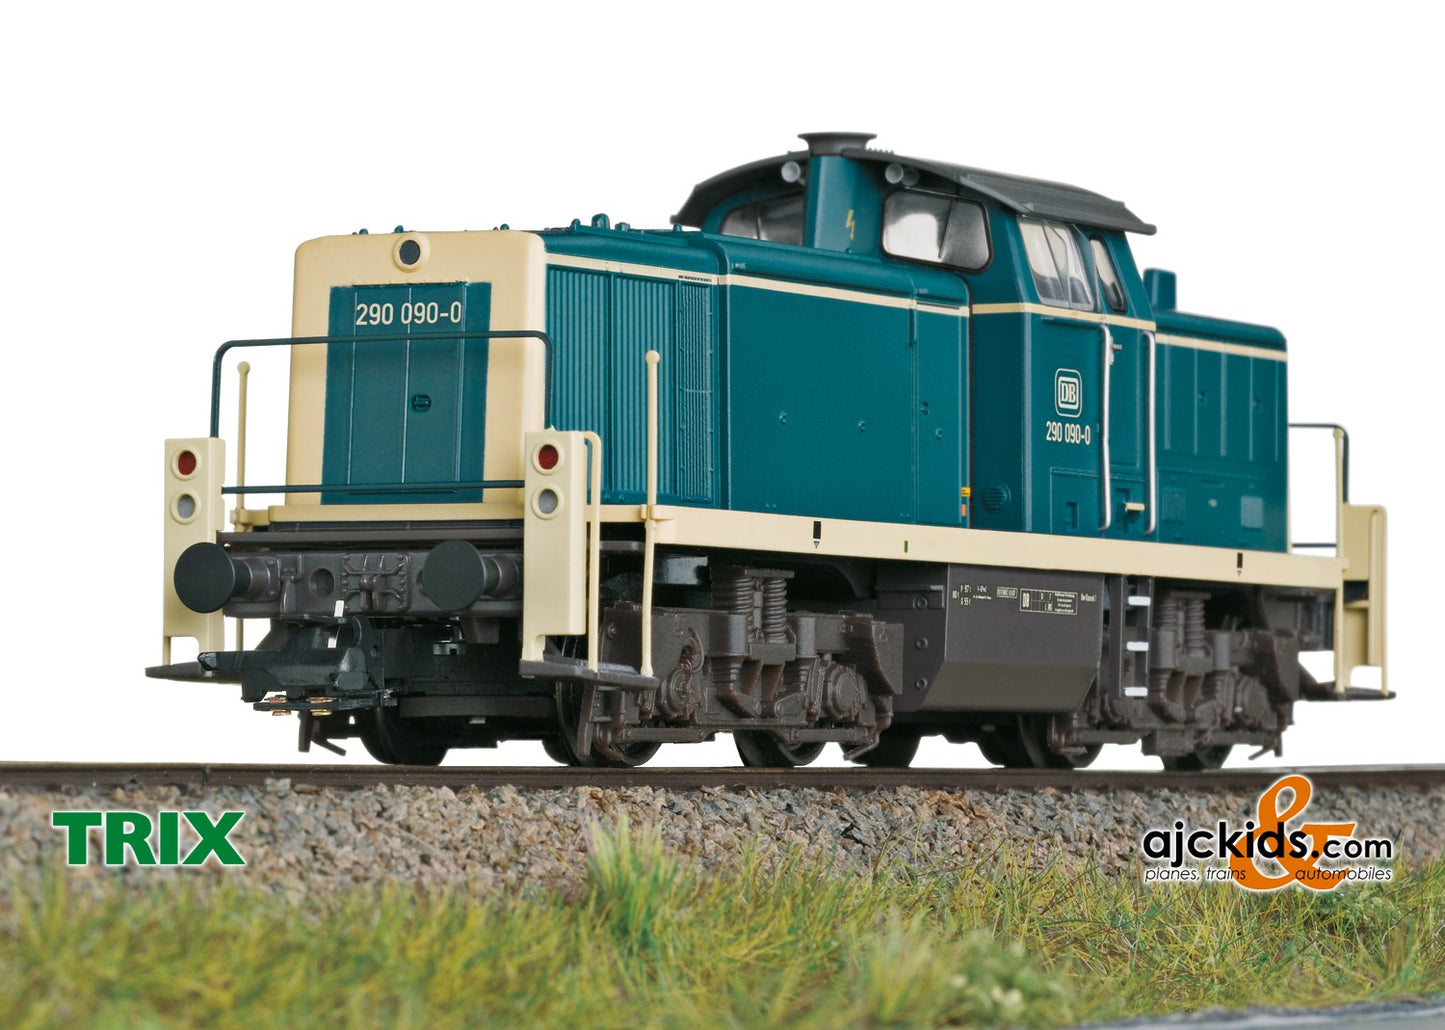 Trix 25903 - Class 290 Diesel Locomotive at Ajckids.com